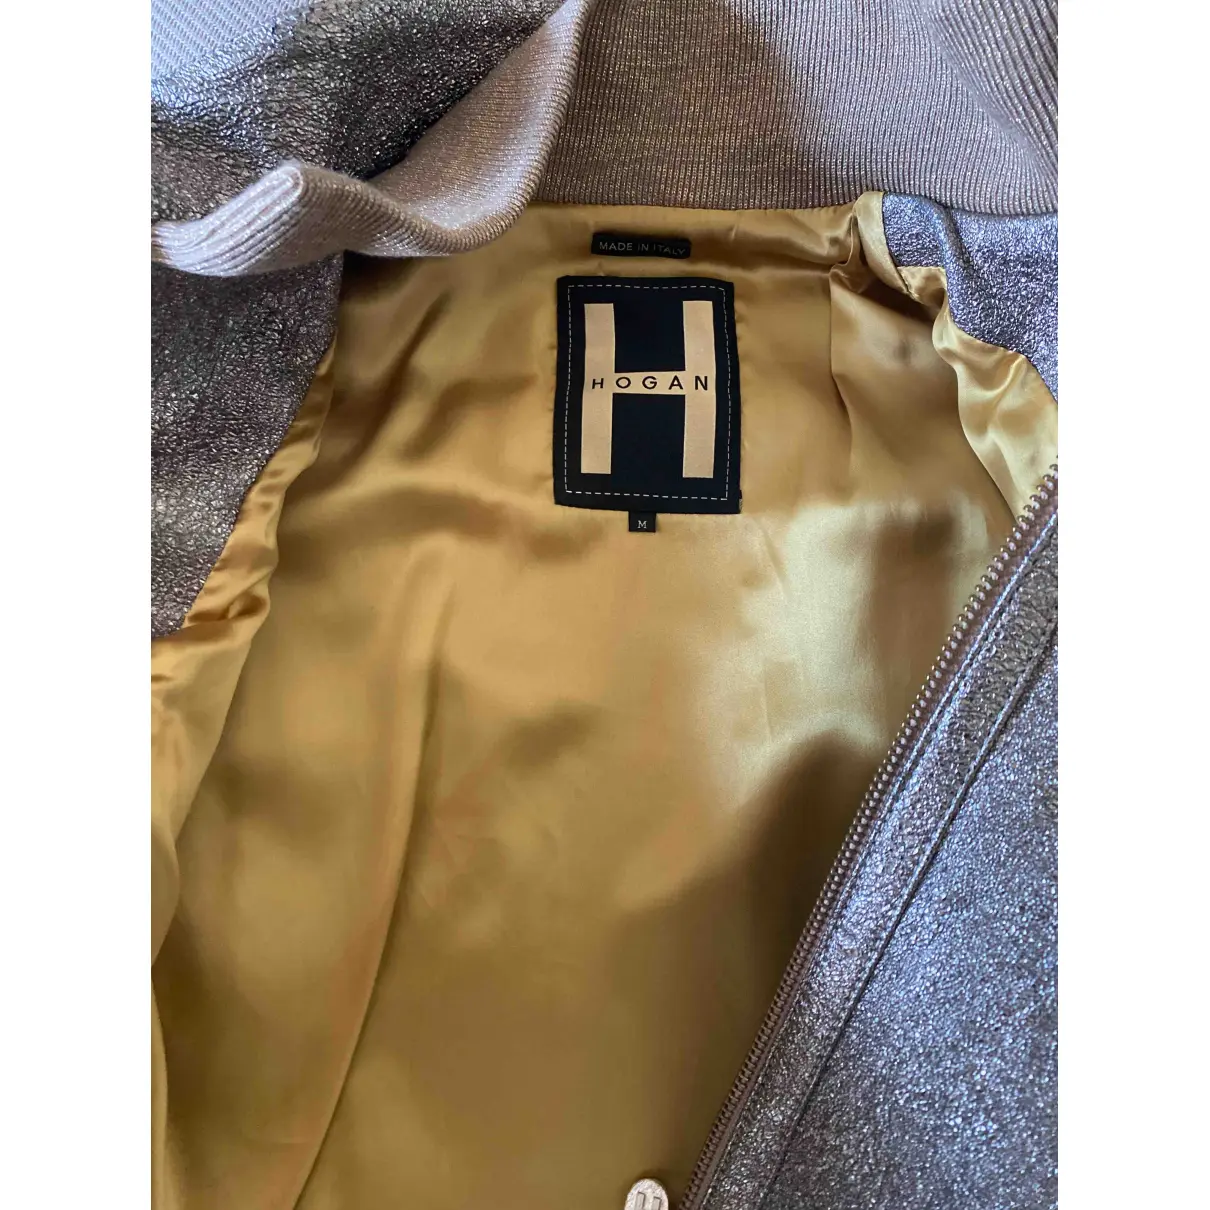 Buy Hogan Glitter jacket online